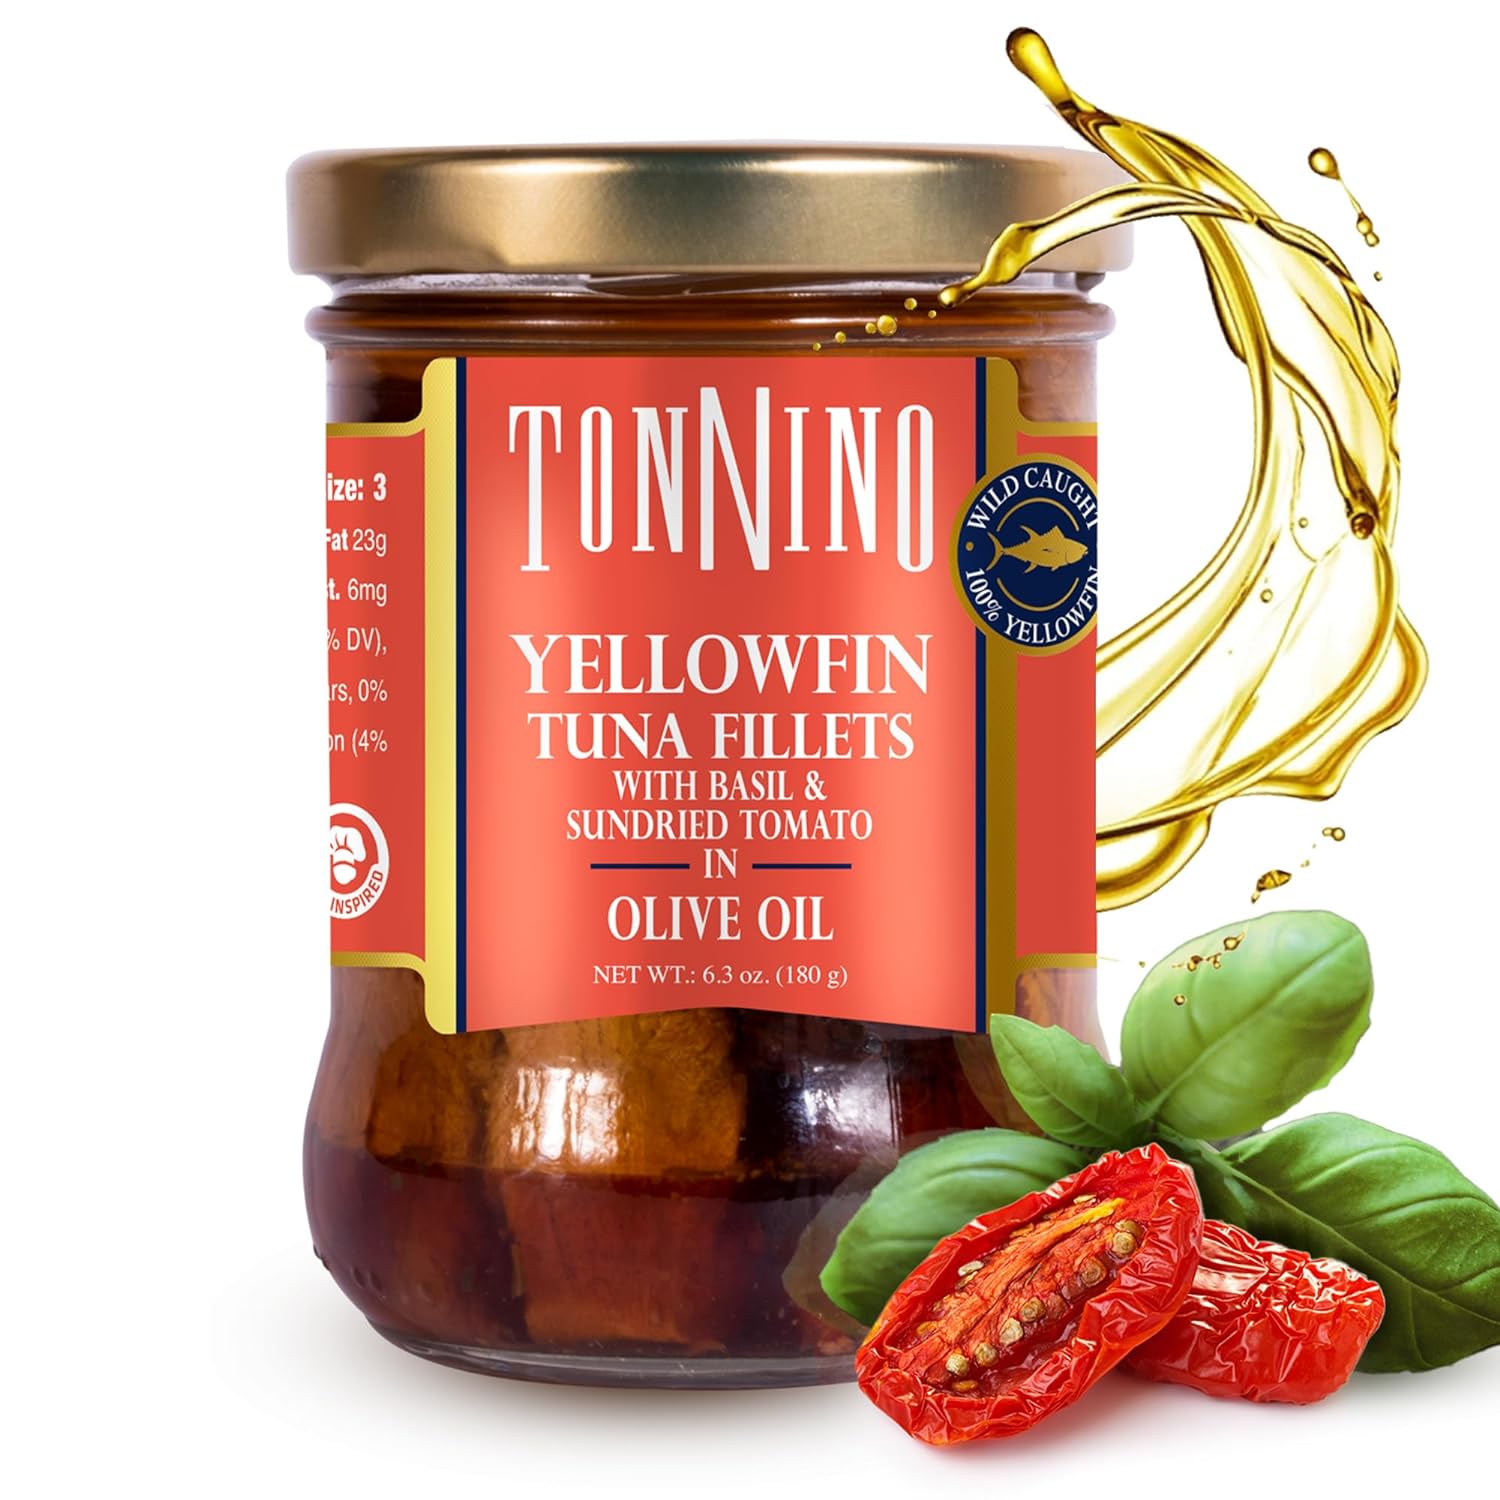 Tonnino Yellowfin Tuna in Olive Oil with Tomato & Basil 6.3 oz - Gourmet 6-Pack: Omega-3, High Protein, Gluten-Free, Ready-to-Eat Tuna Packets for Tuna Salad, Tuna Fish Alternative to Salmon